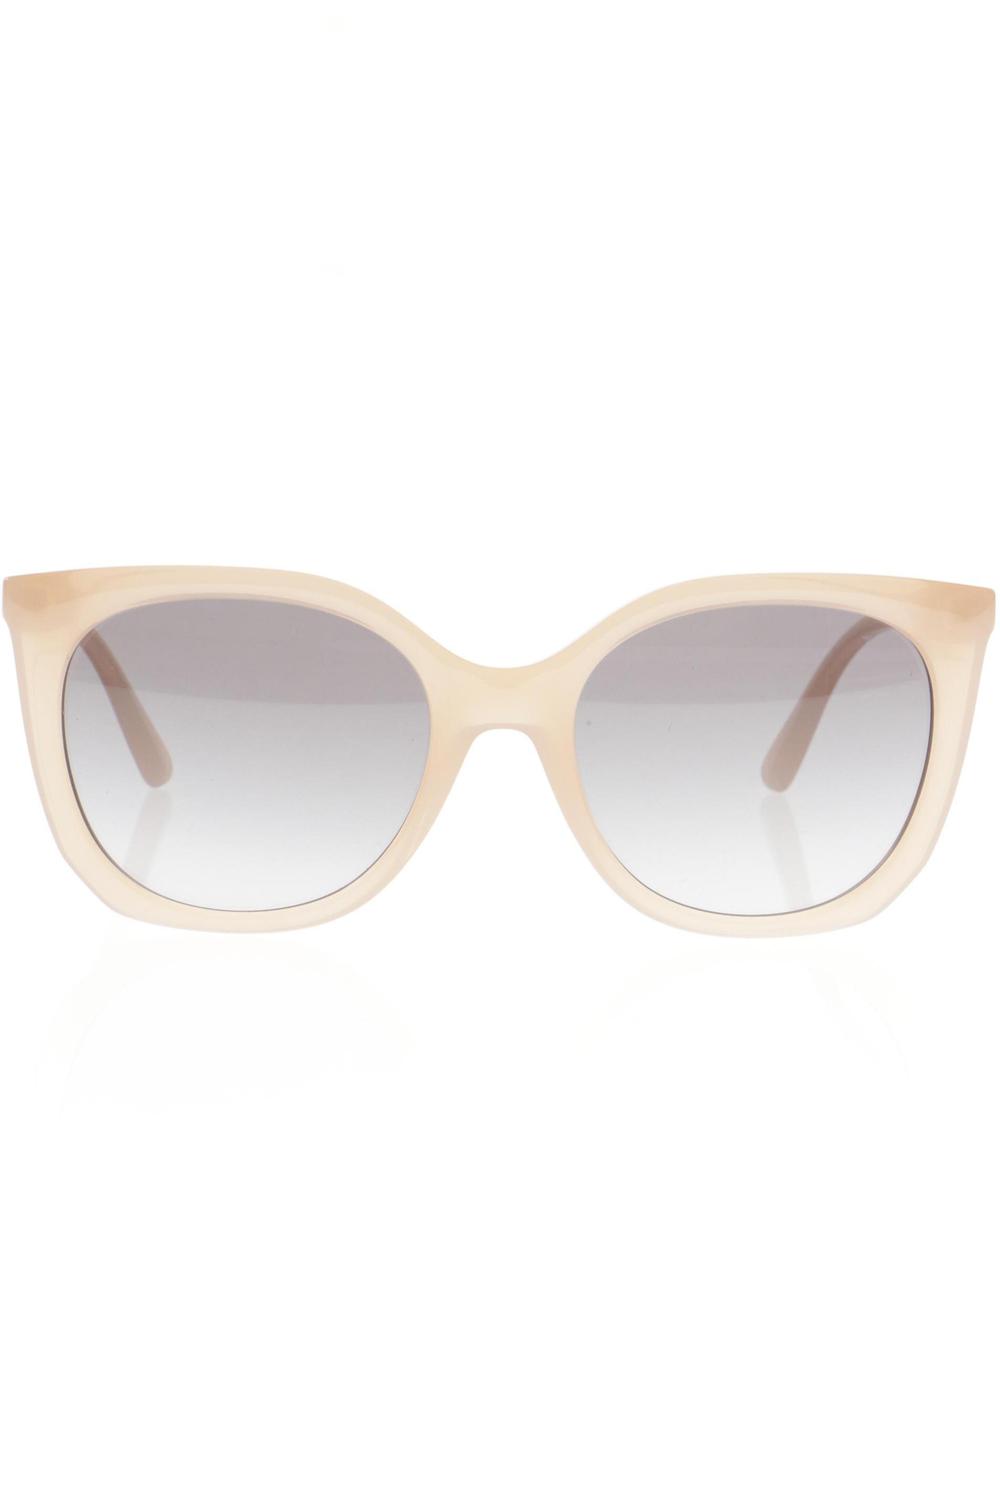 Coach Sonnenbrille Damen Sunglasses Brille beige #5dfbb16 | eBay